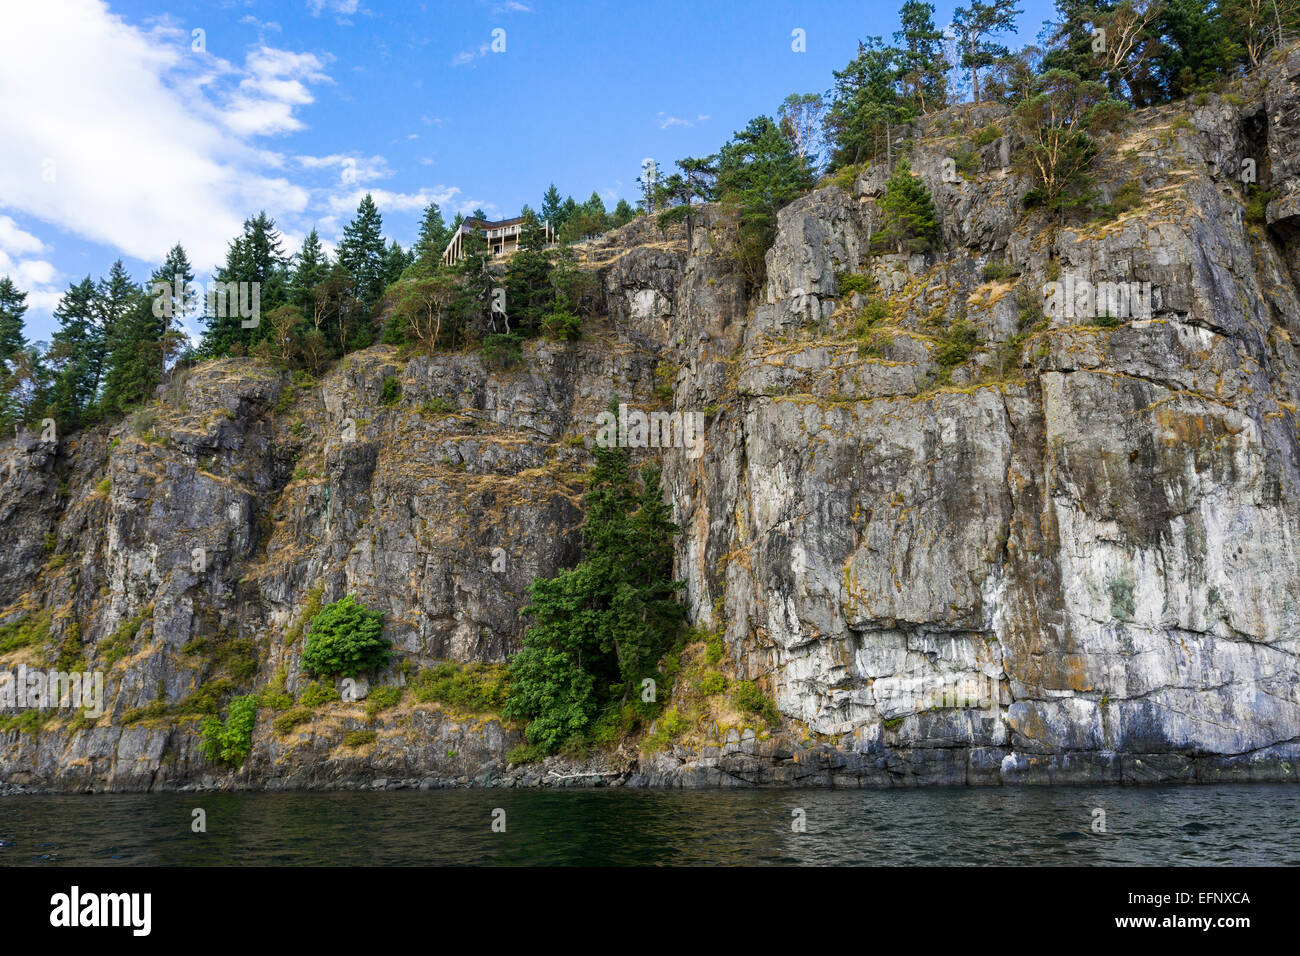 North America, Canada, British Columbia, Quadra Island, house at top of cliff Stock Photo